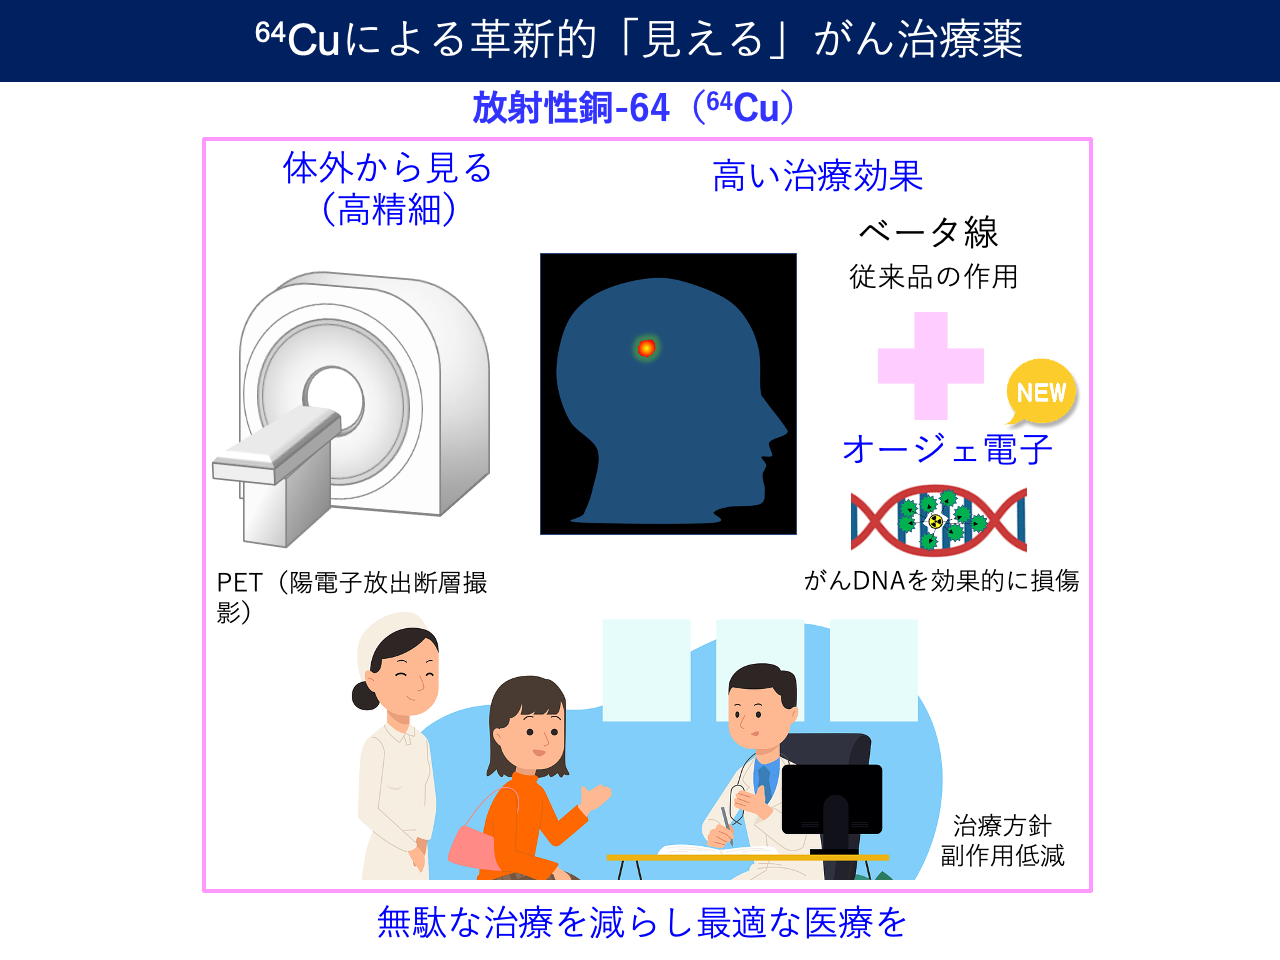 64Cuによる革新的「見える」がん治療薬のイメージ